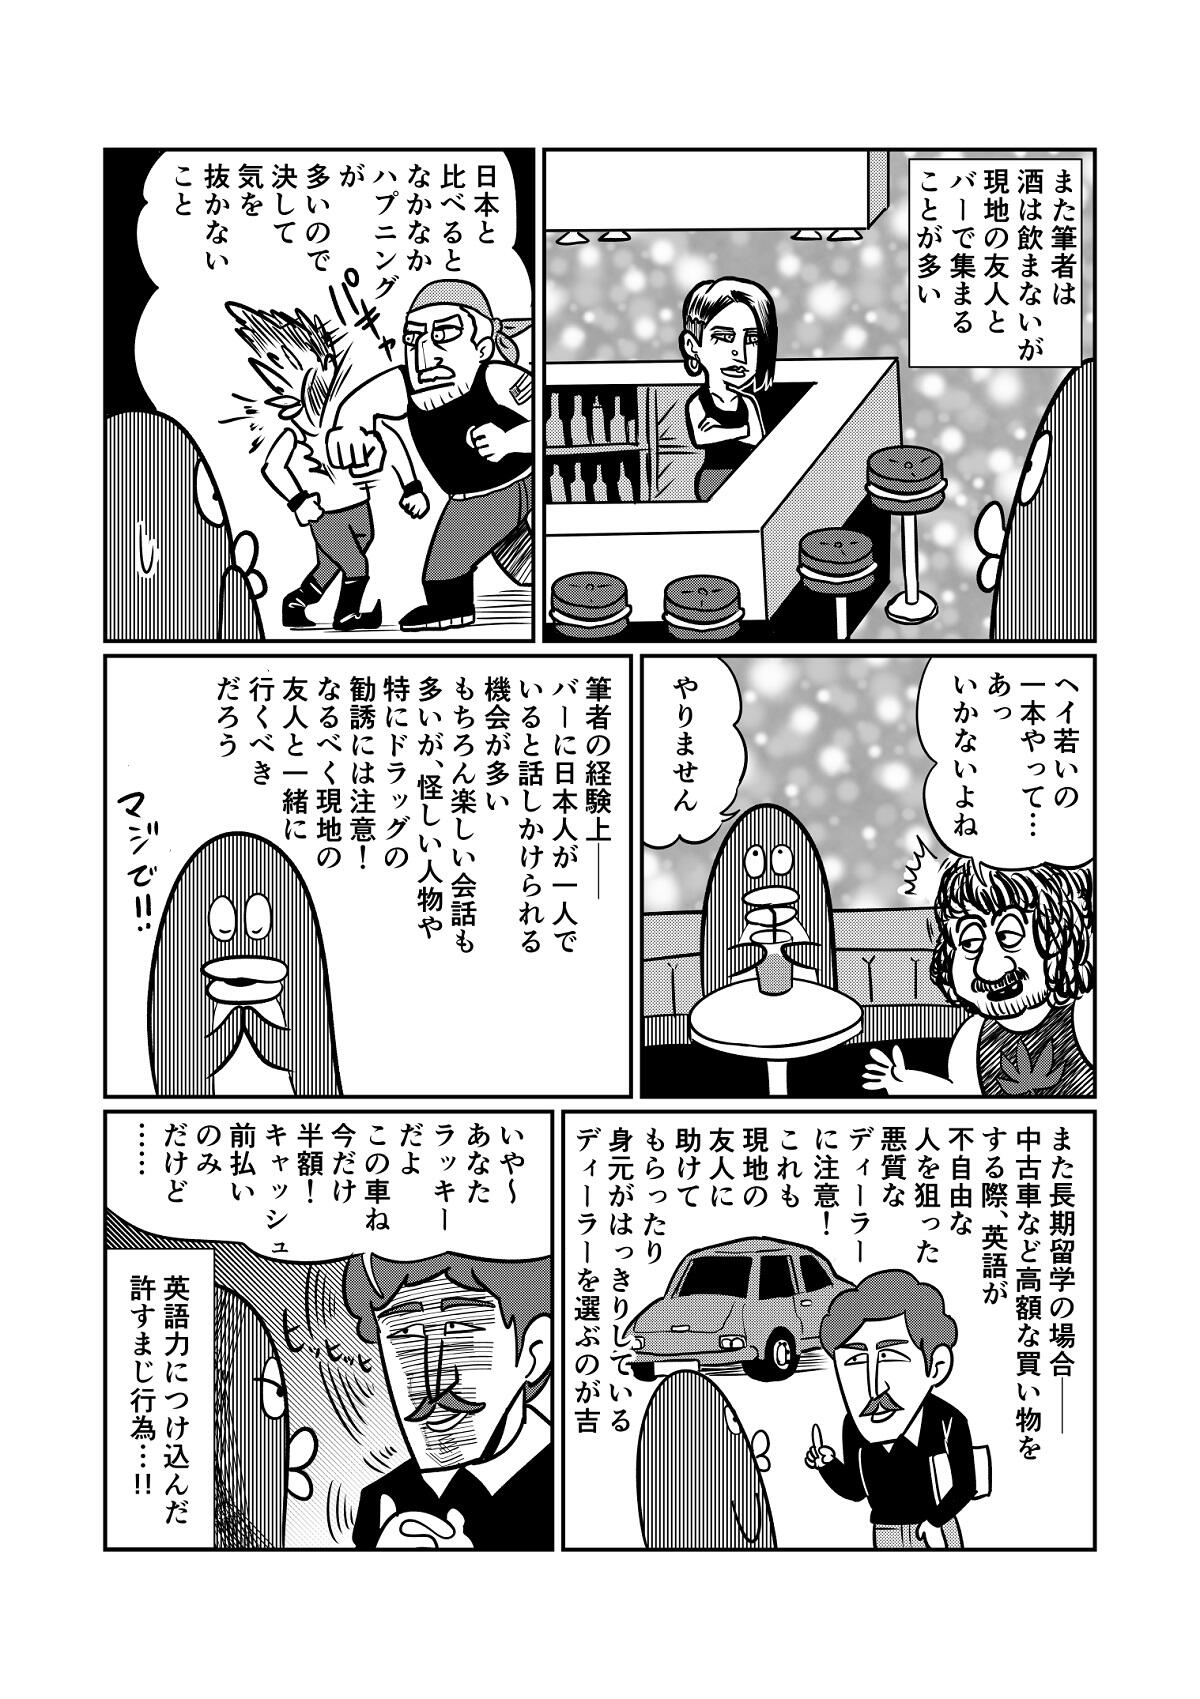 https://www.ryugaku.co.jp/column/images/jawamura13_4_1200.jpg